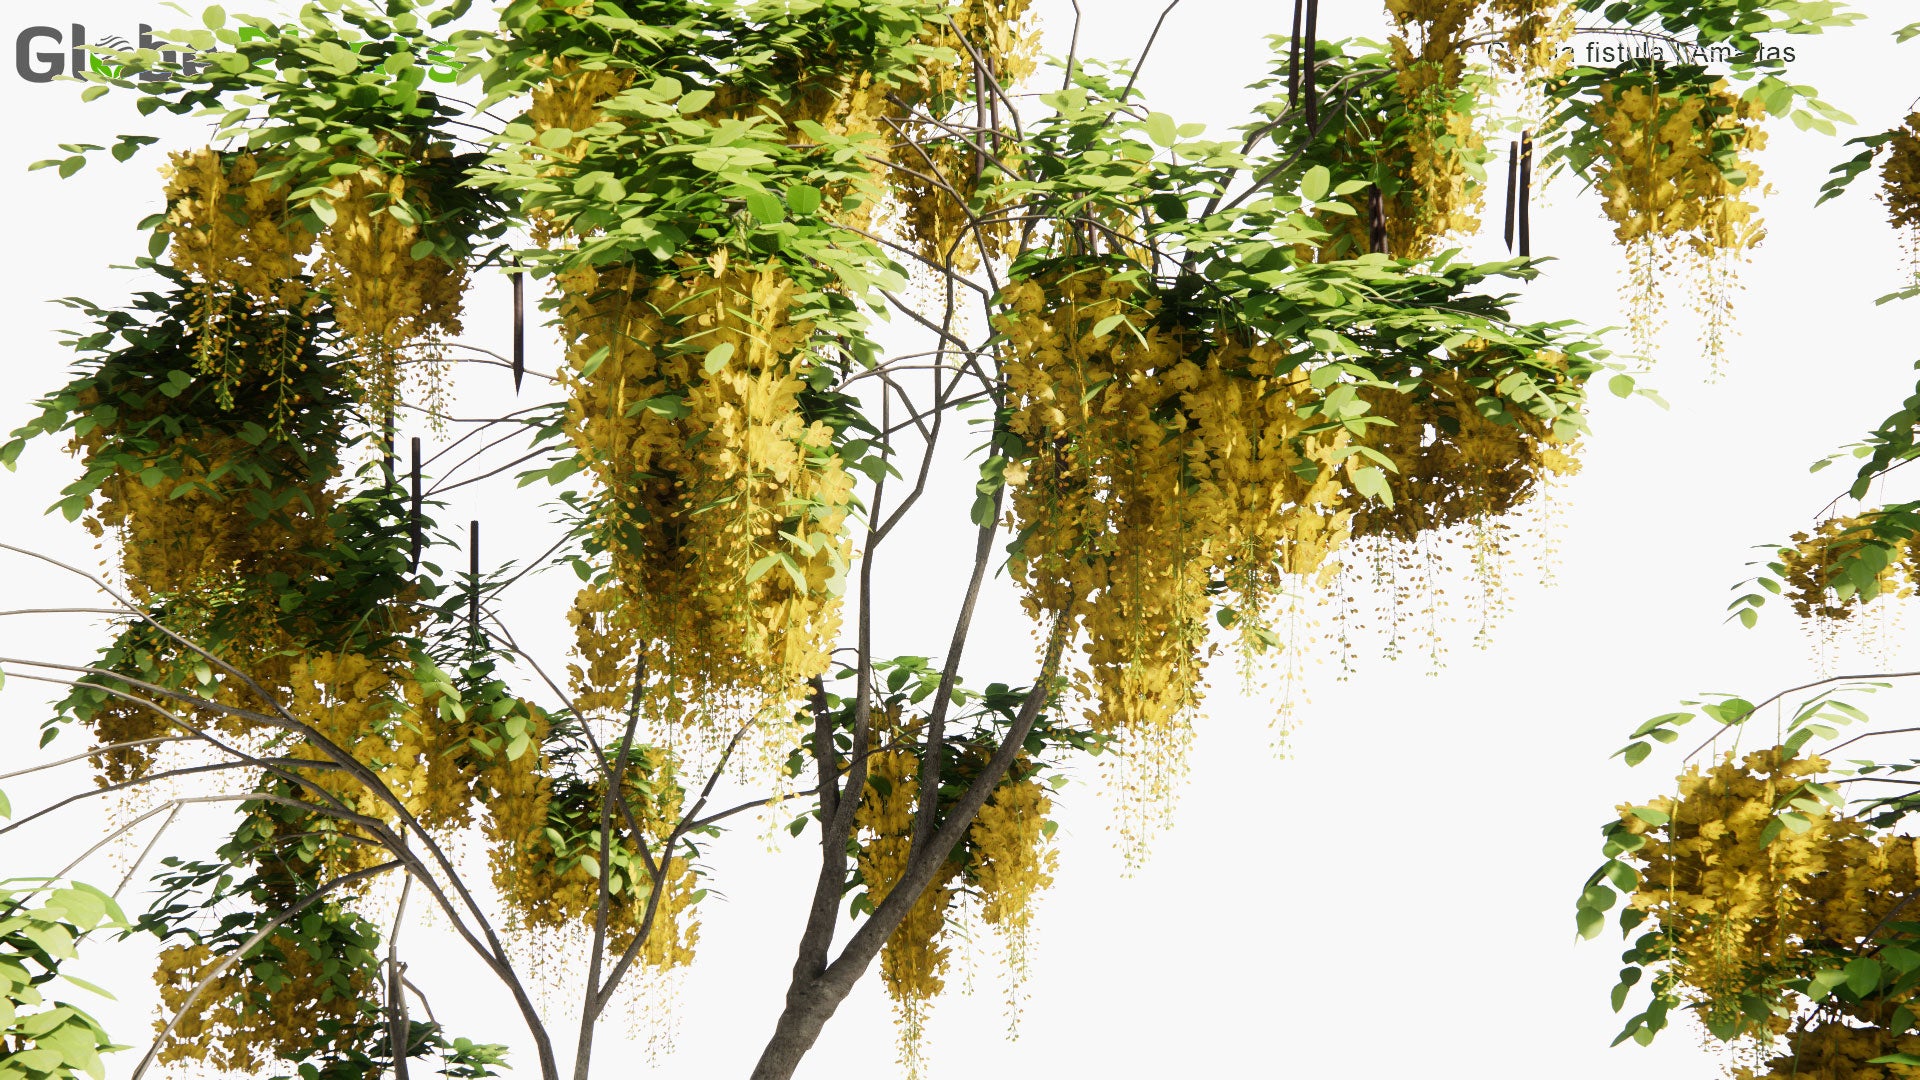 Low Poly Cassia Fistula - Amaltas, Golden Shower, Purging Cassia, Indian Laburnum, Pudding-Pipe Tree (3D Model)